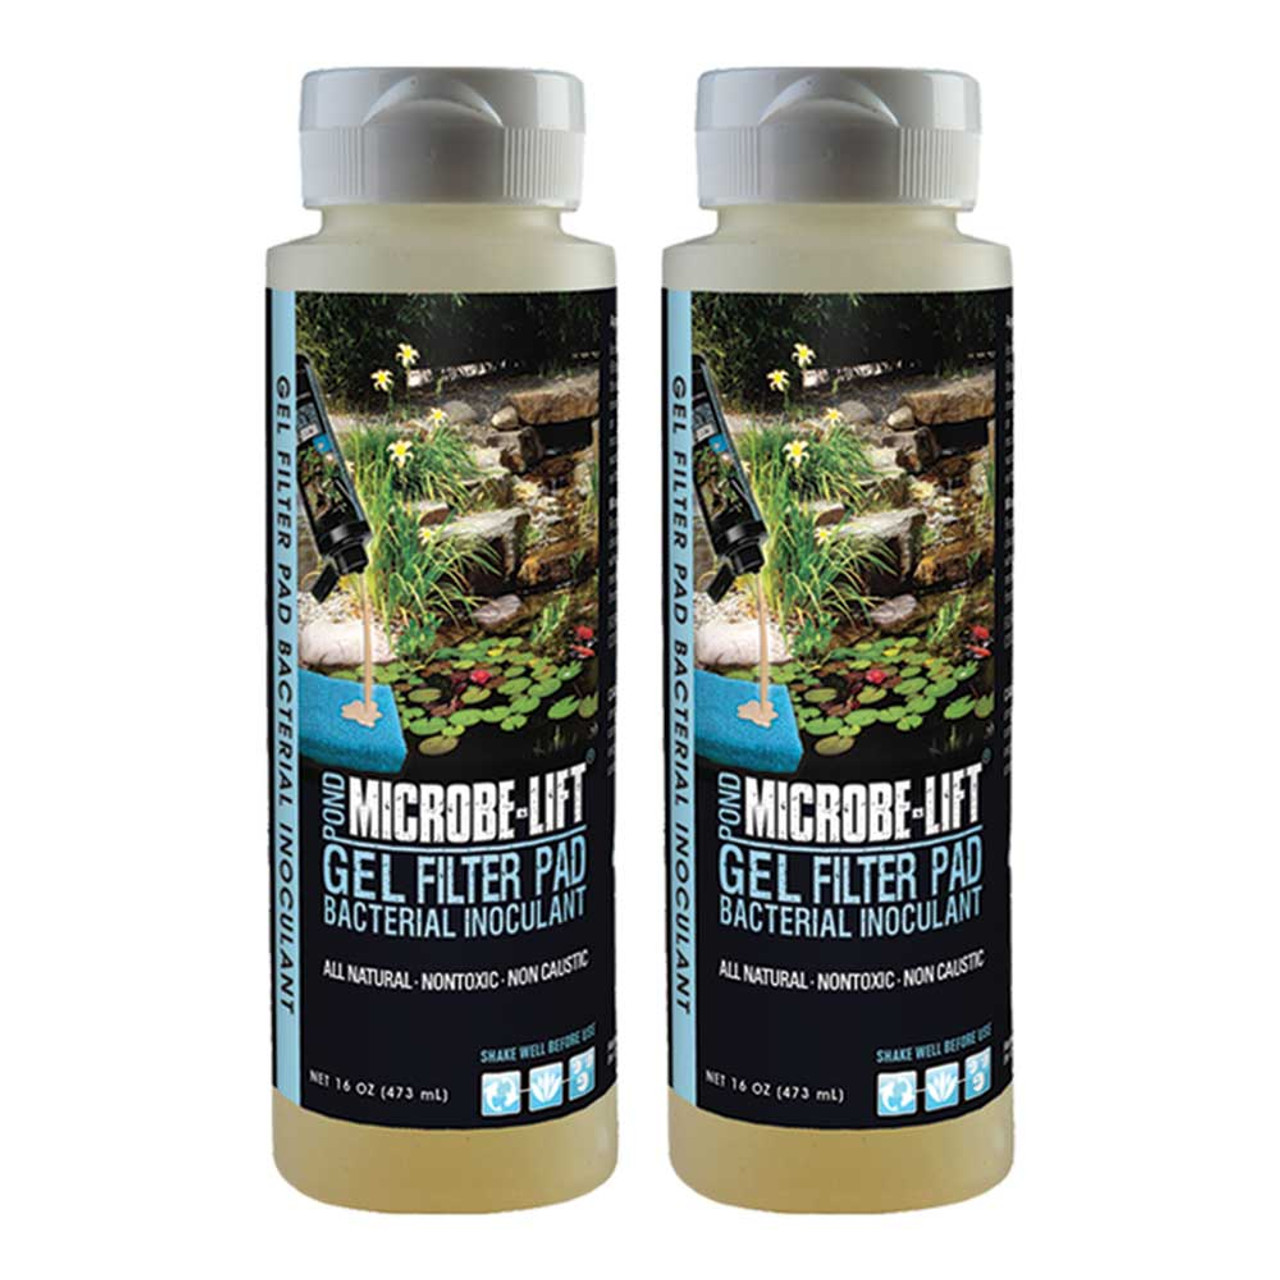 Microbe-Lift PL Gel - Filter Pad Bacterial Inoculant